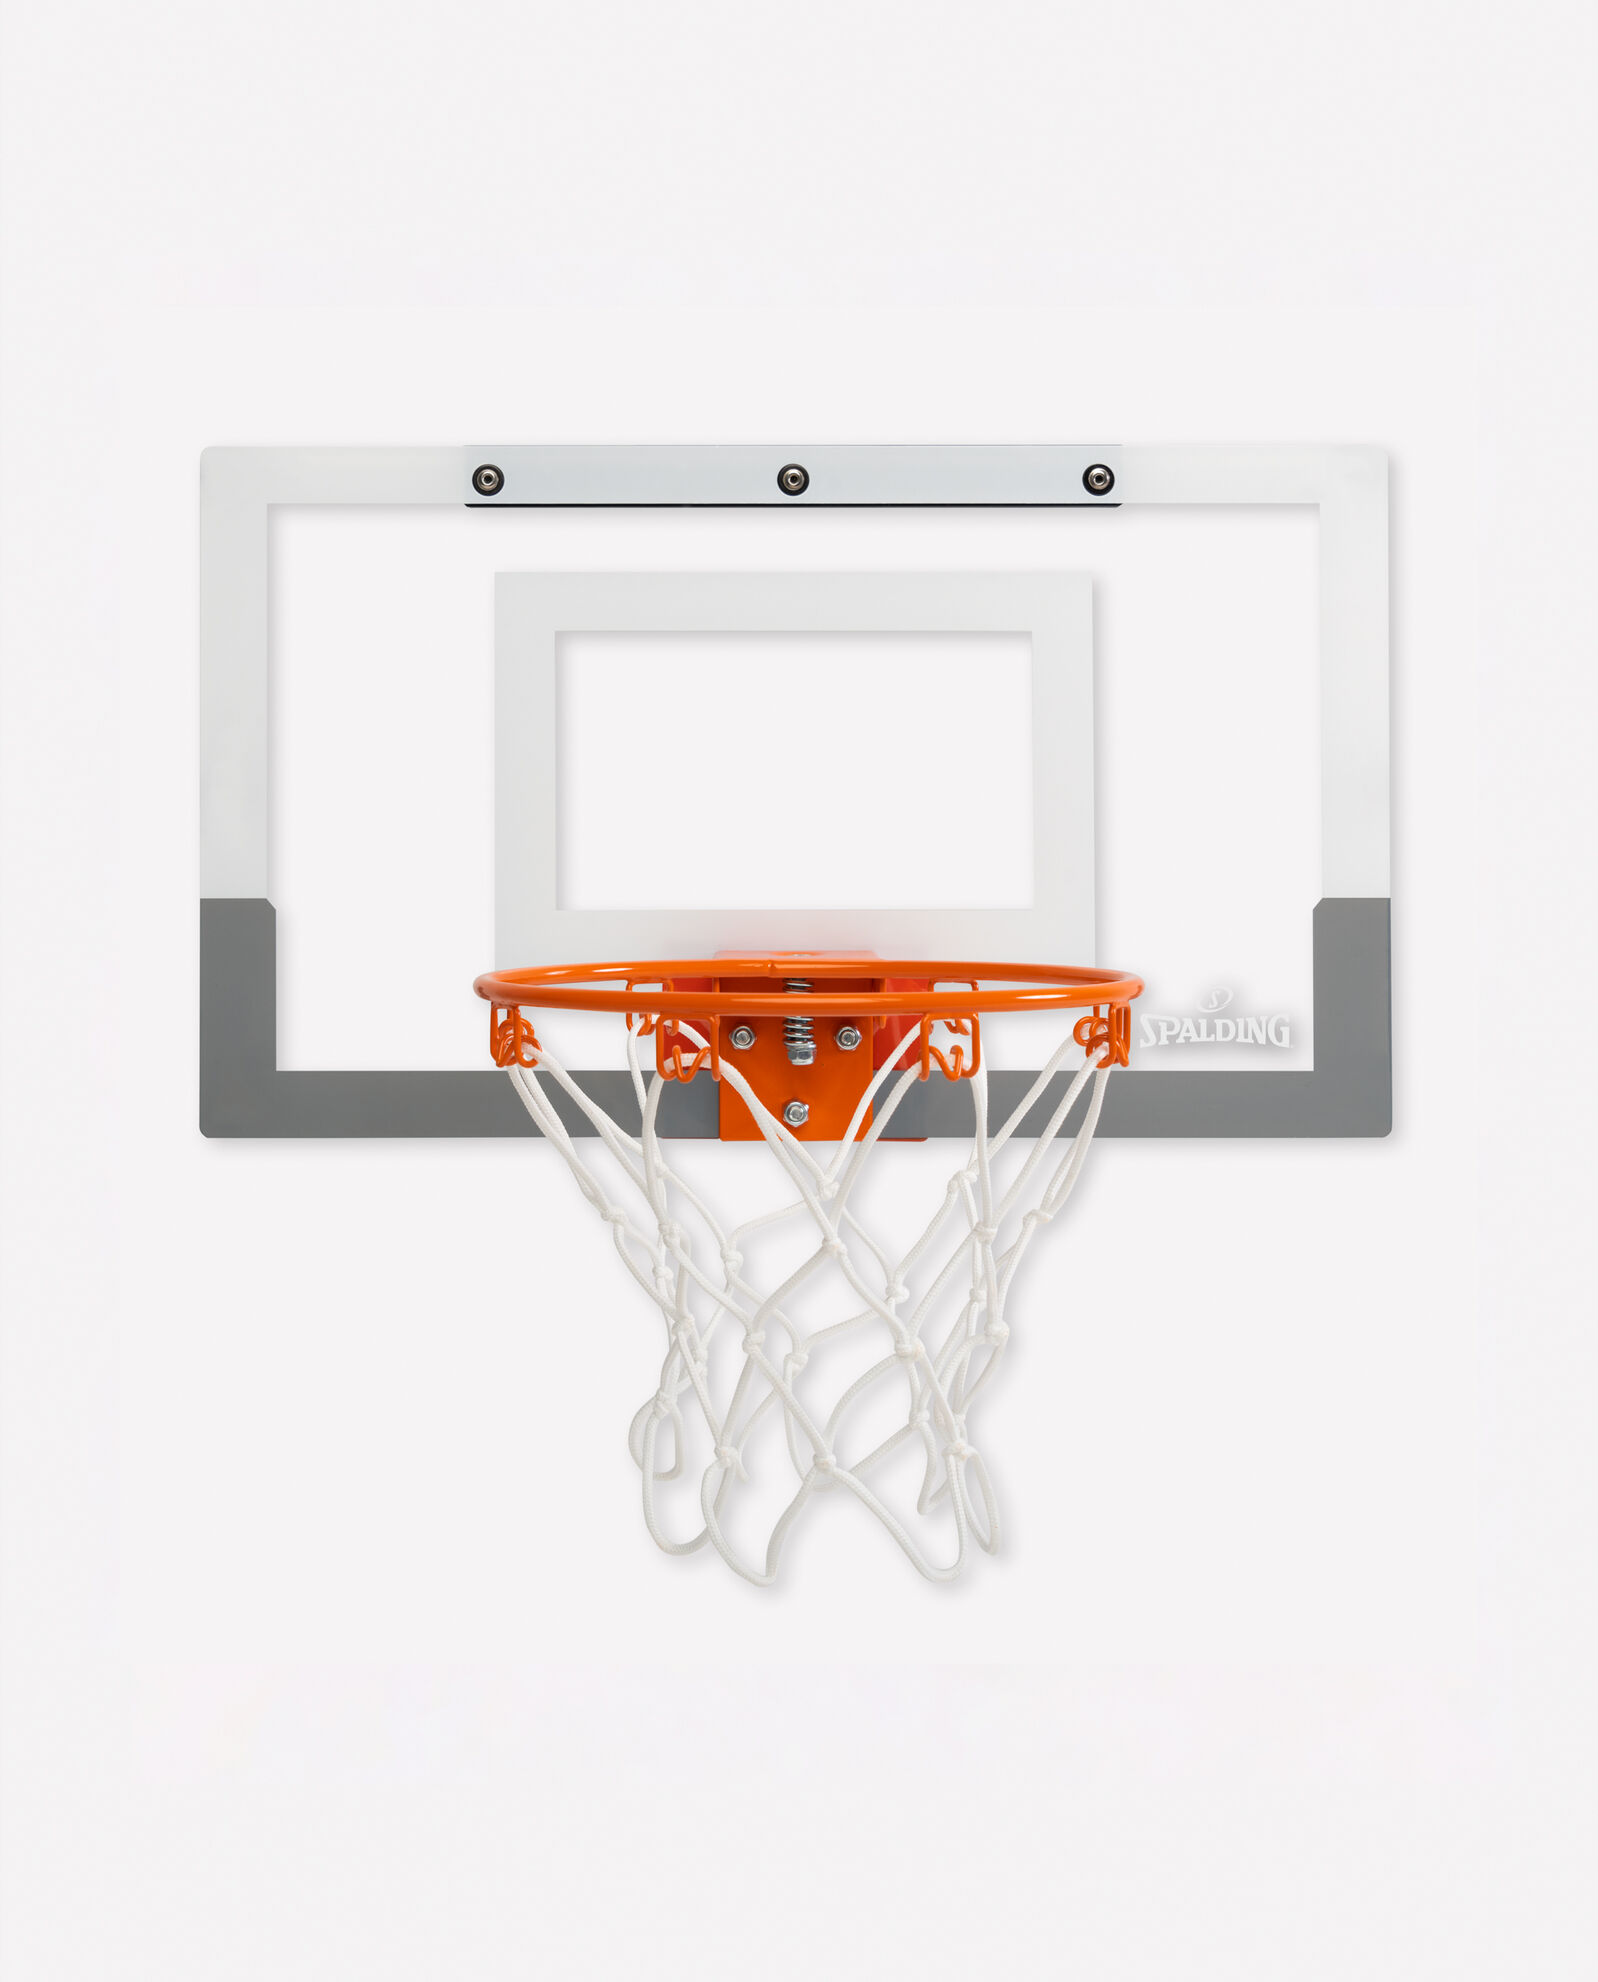 Spalding NBA Slam Jam Mini Basketball Backboard Grey